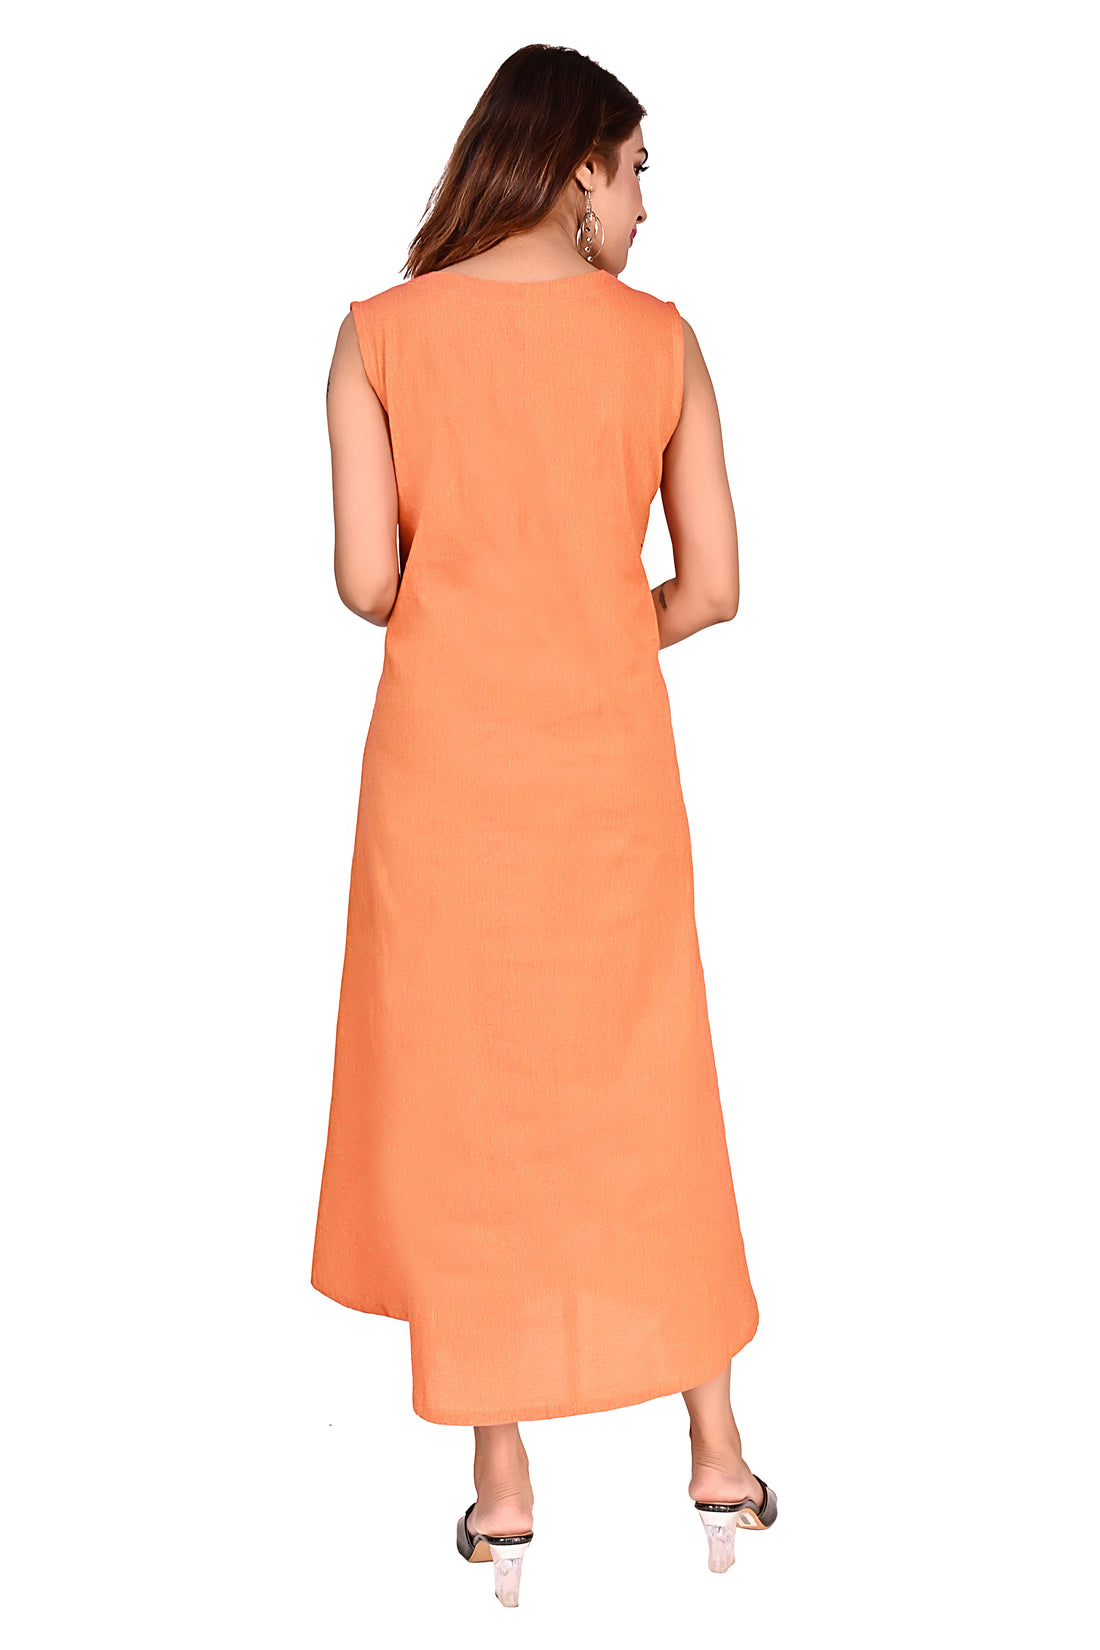 Nirmal online Premium cotton tunic Dress for Women in  Orange colour